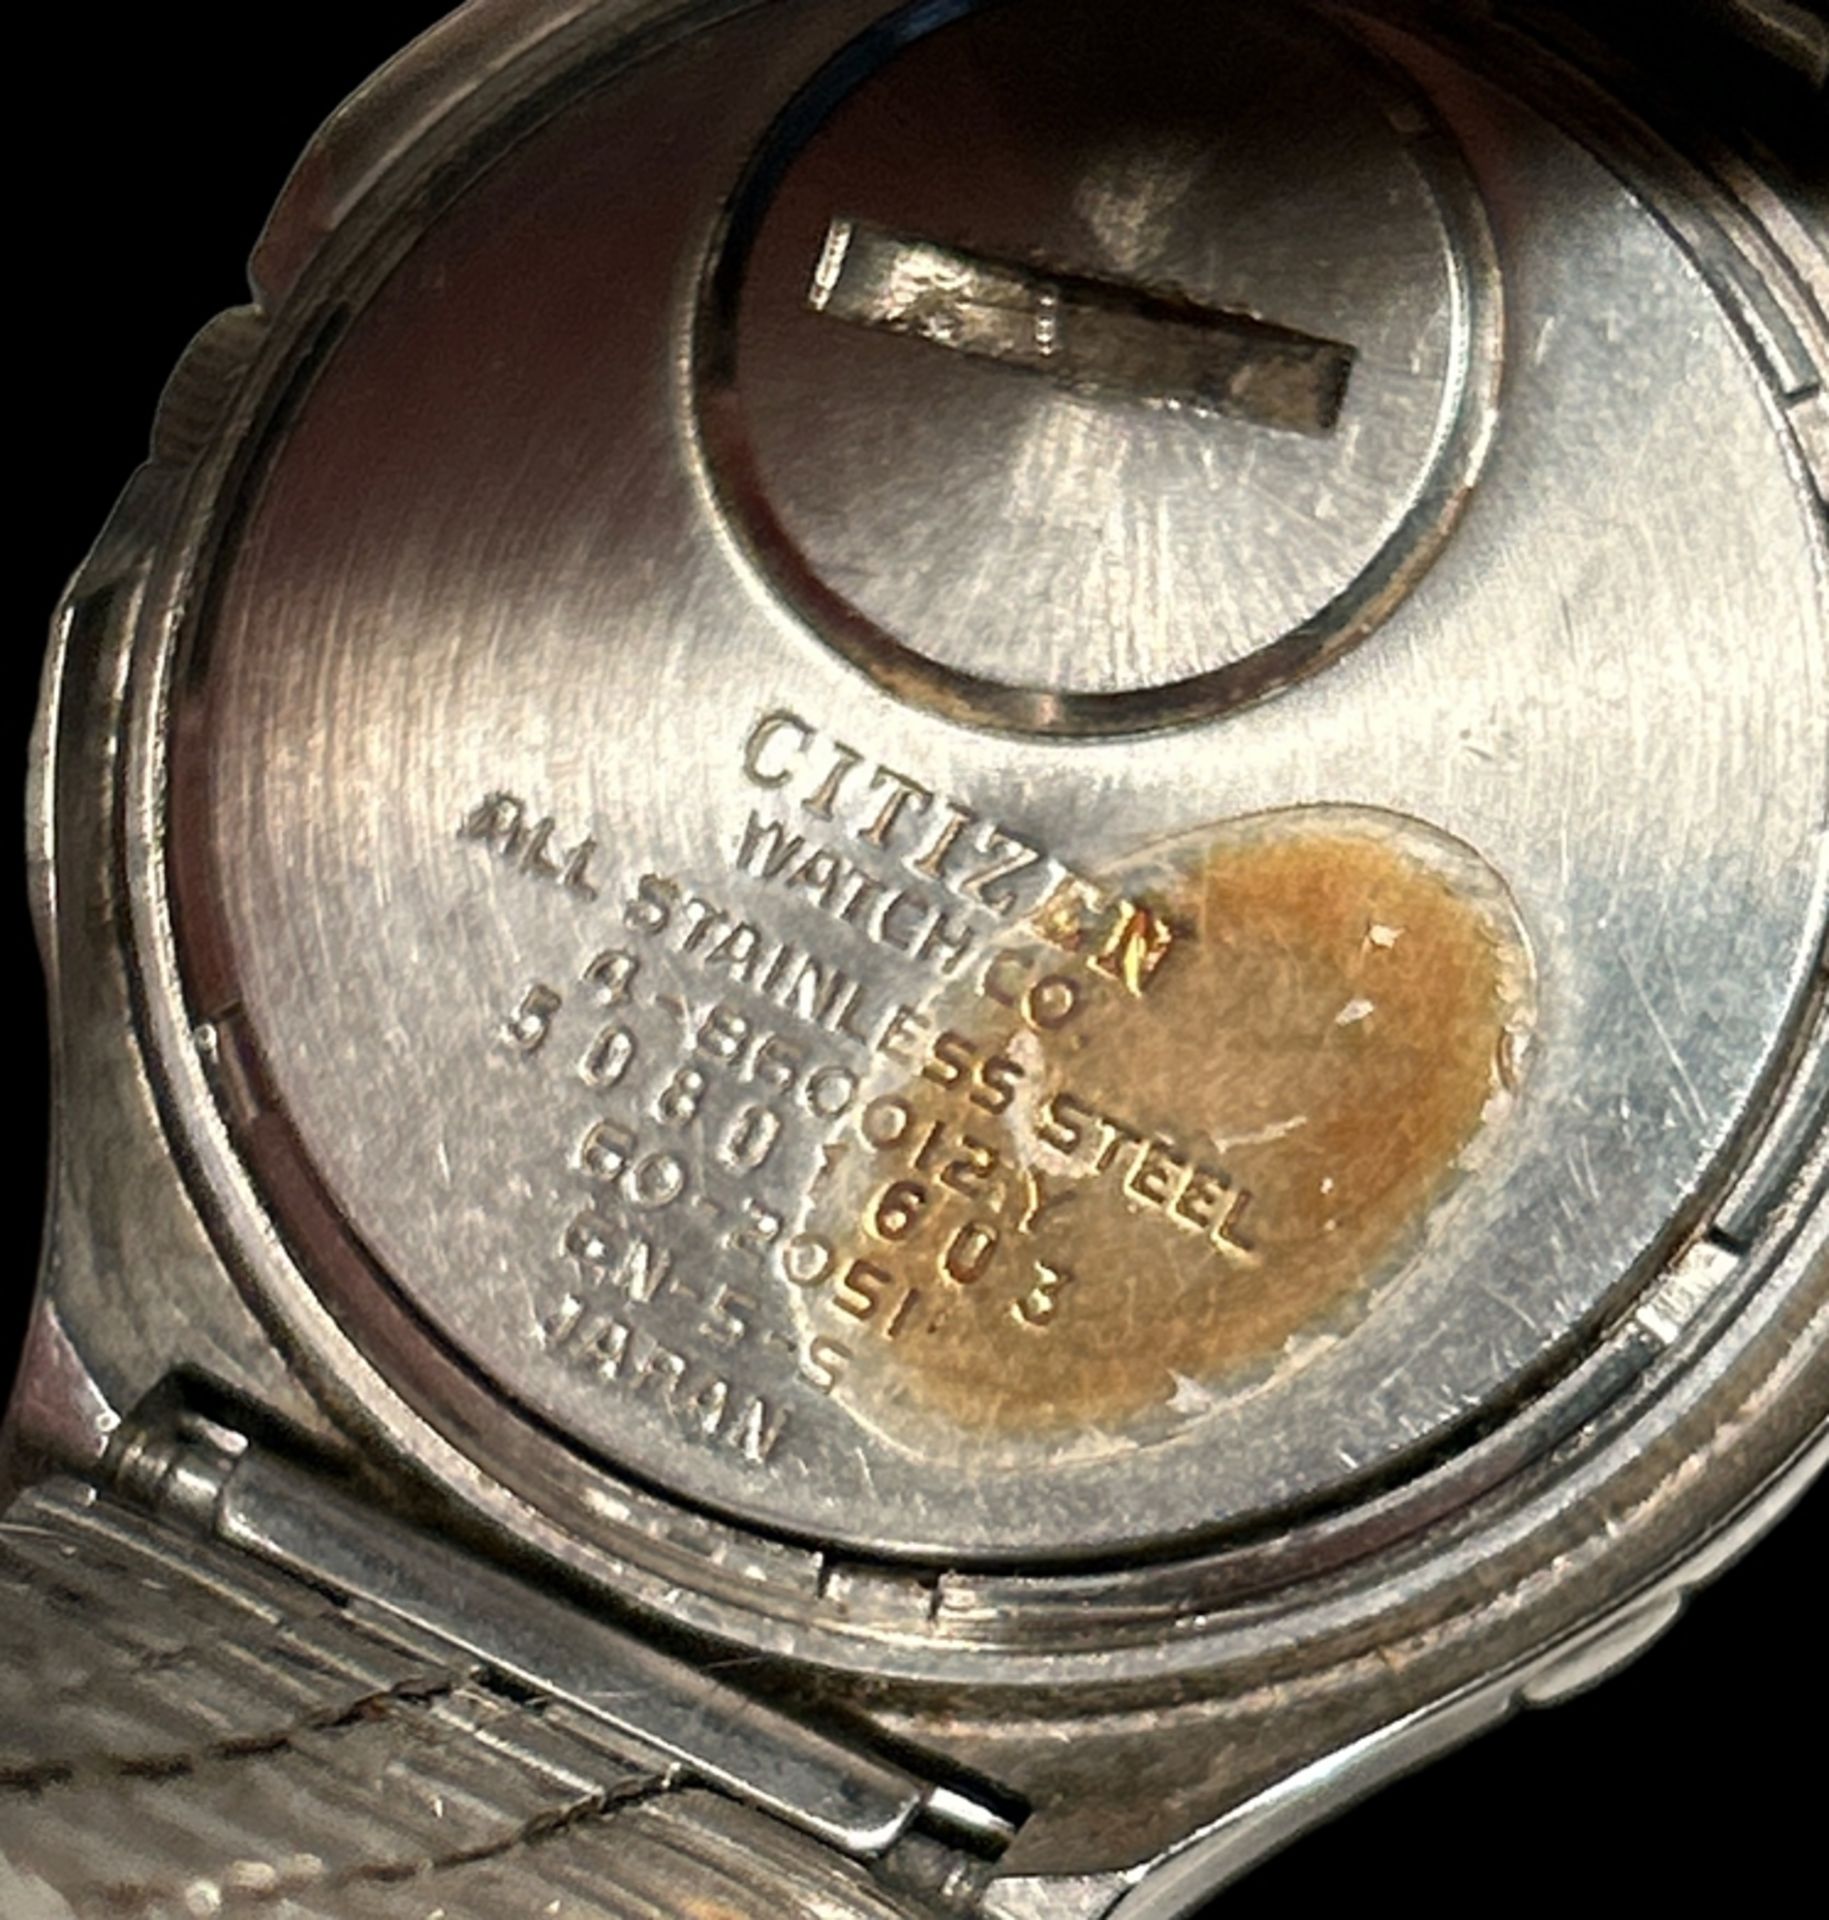 HAU "Citizen Crystron" frühe Quartz Armbanduhr, porig. Stahlband, Werk nicht überprüft - Image 3 of 3